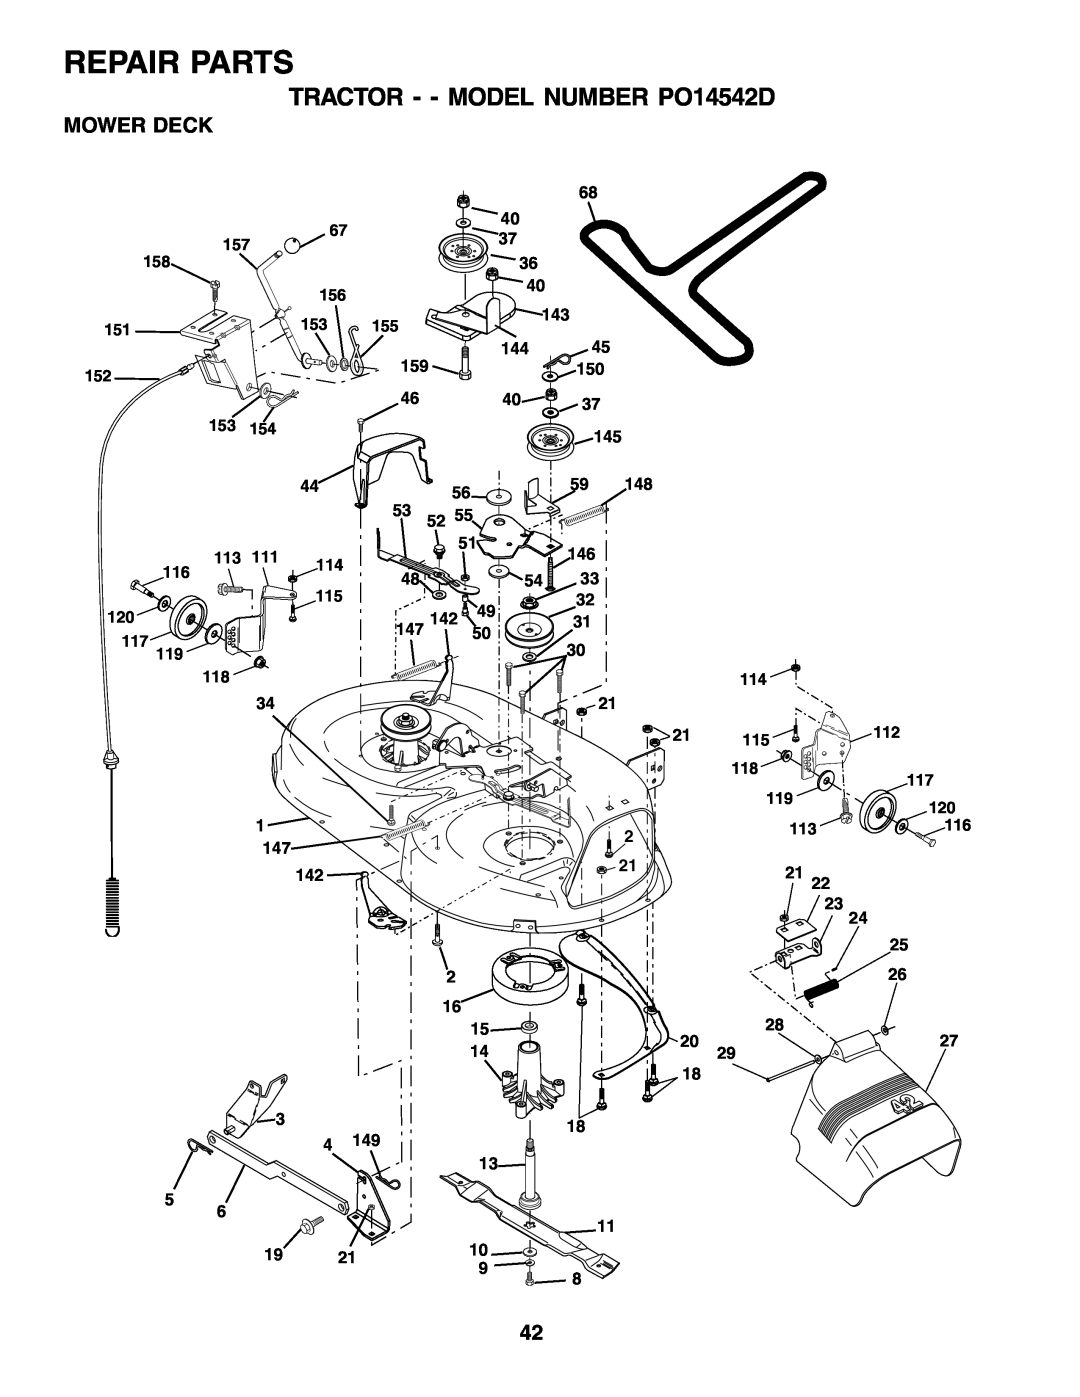 Poulan manual Repair Parts, TRACTOR - - MODEL NUMBER PO14542D, Mower Deck 